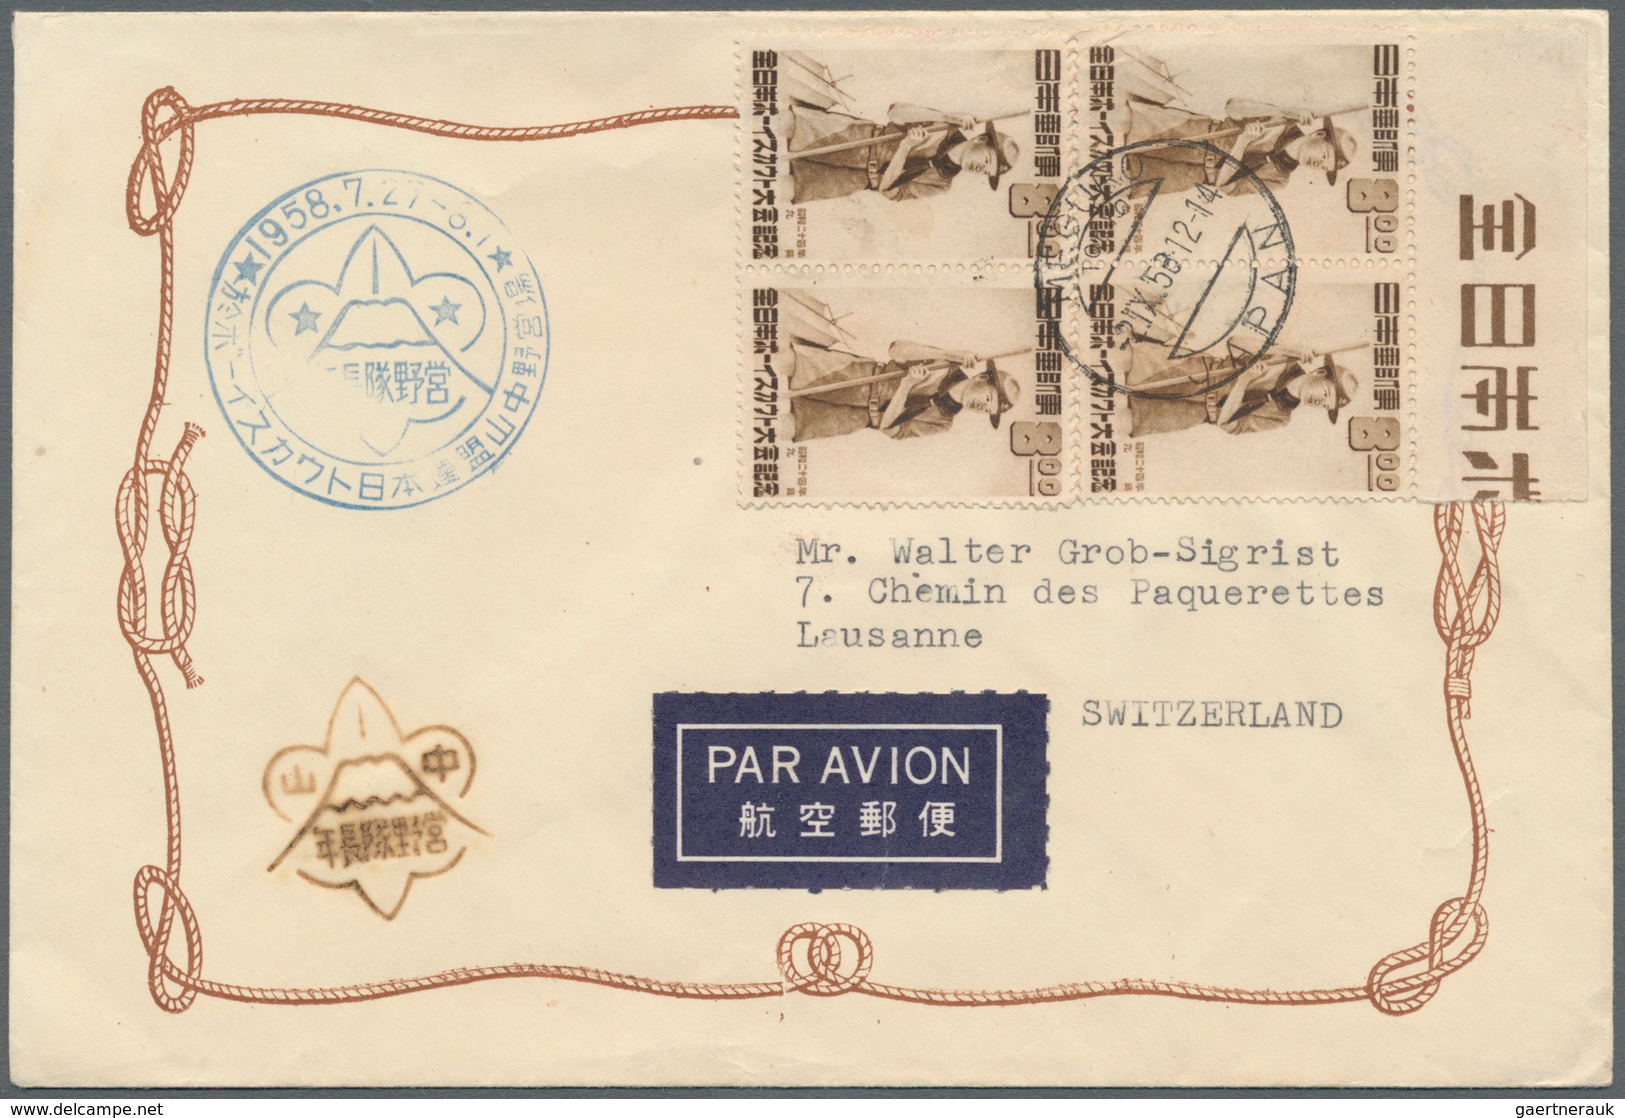 Japan: 1949/59, Japan, covers/FDC (9) mostly w. 1949 boy scout stamp inc. 1950.8.19 Shinjuku commemo